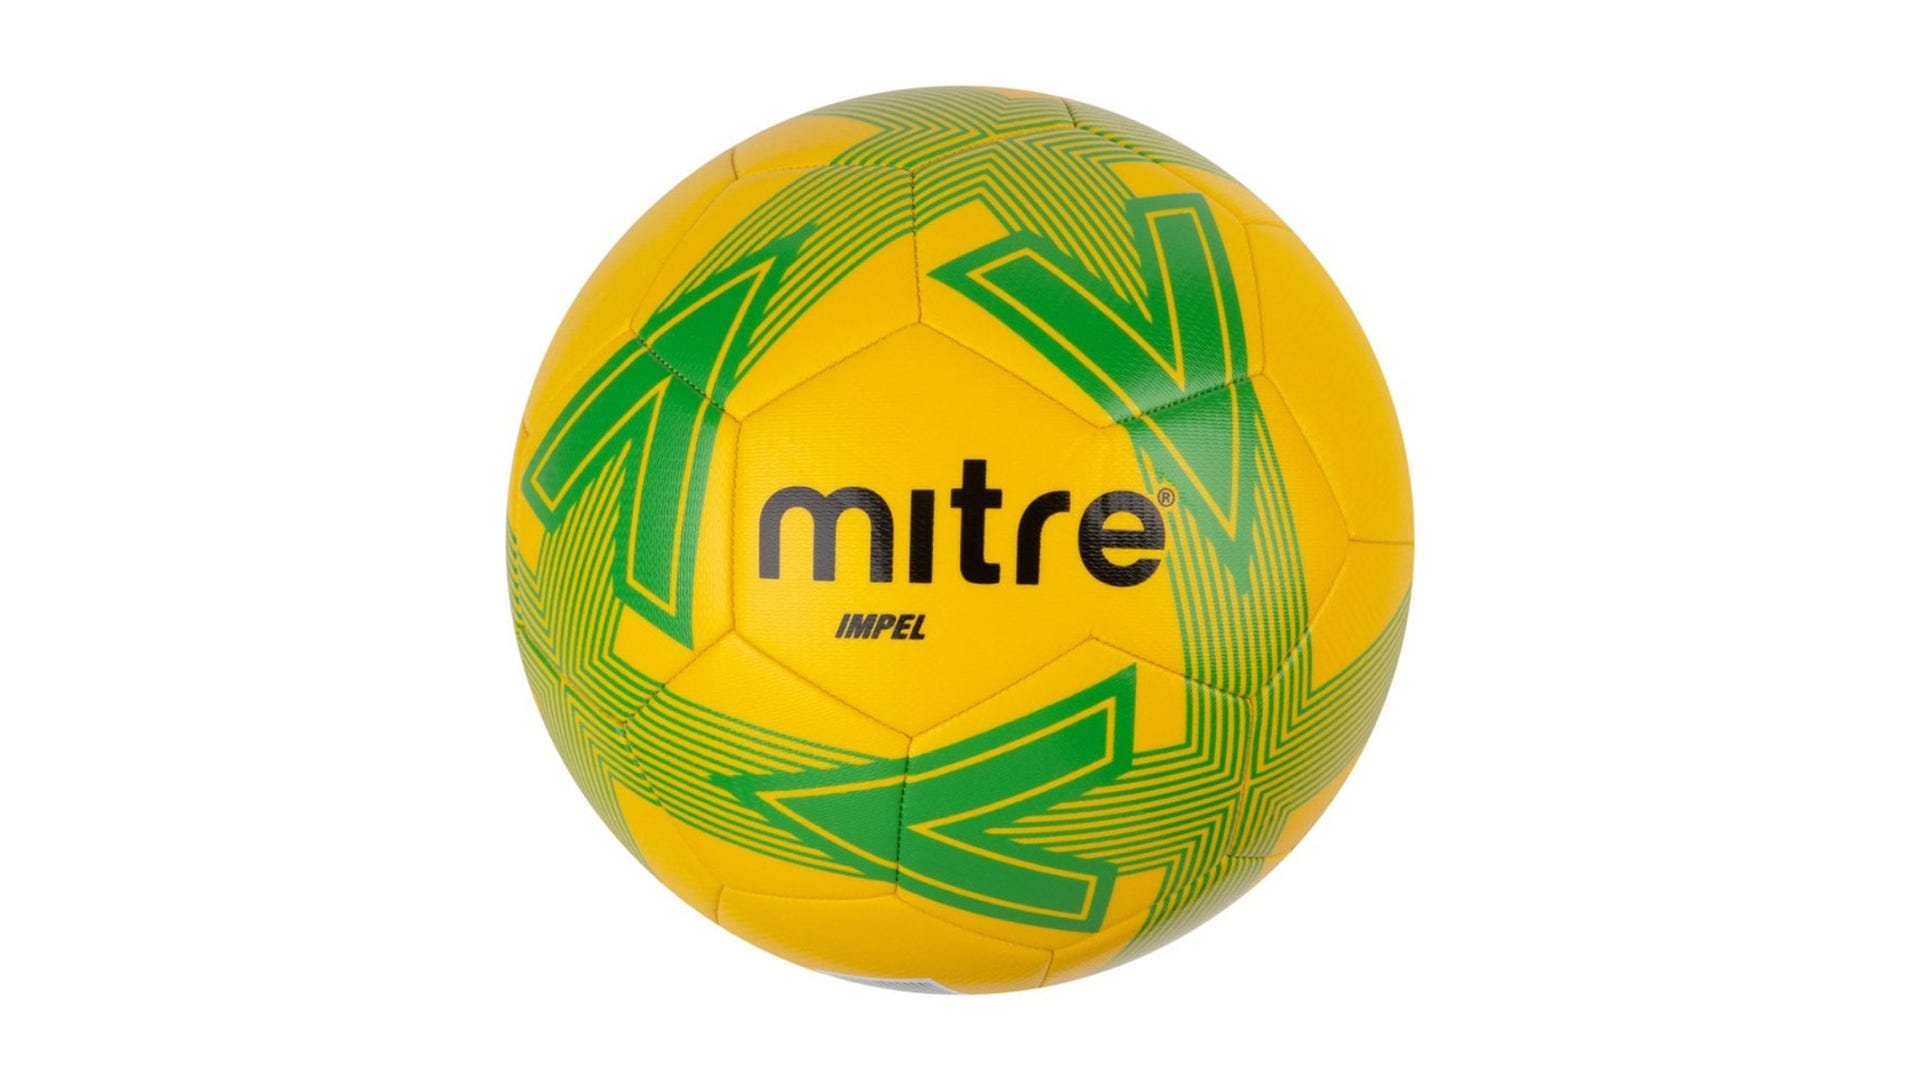 Mitre Impel Yellow Training Football Ball Size 3,4,5 ✅ FREE UK SHIPPING ✅ 